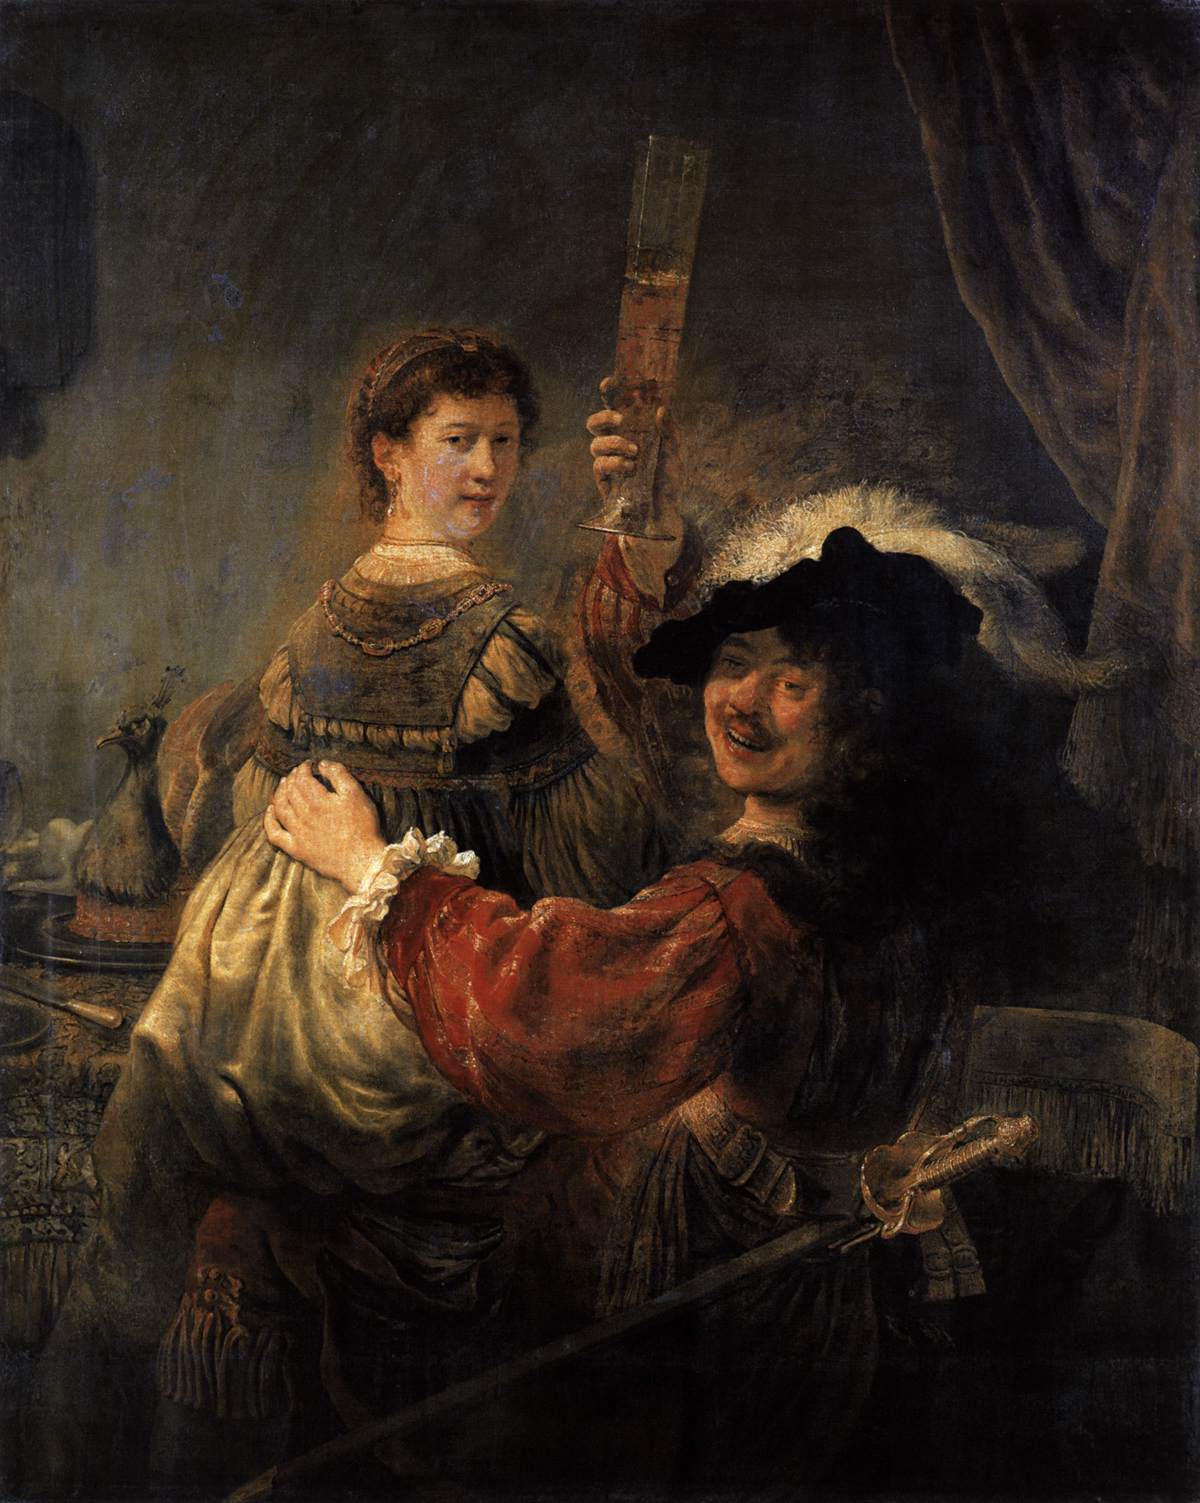 Rembrandt og Saskia i scenen med den fortabte søn i kro